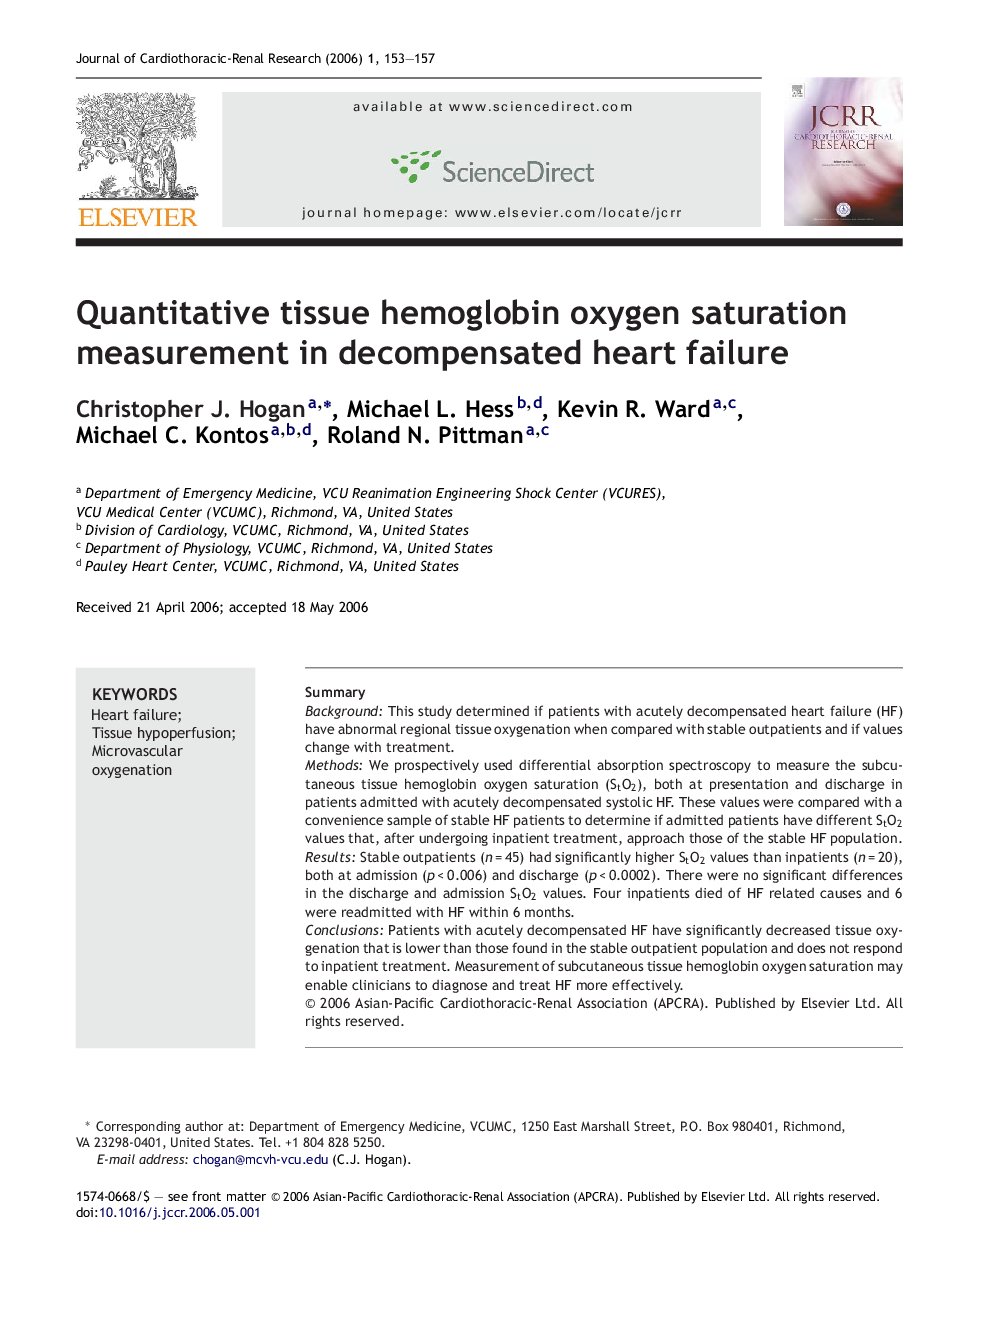 Quantitative tissue hemoglobin oxygen saturation measurement in decompensated heart failure